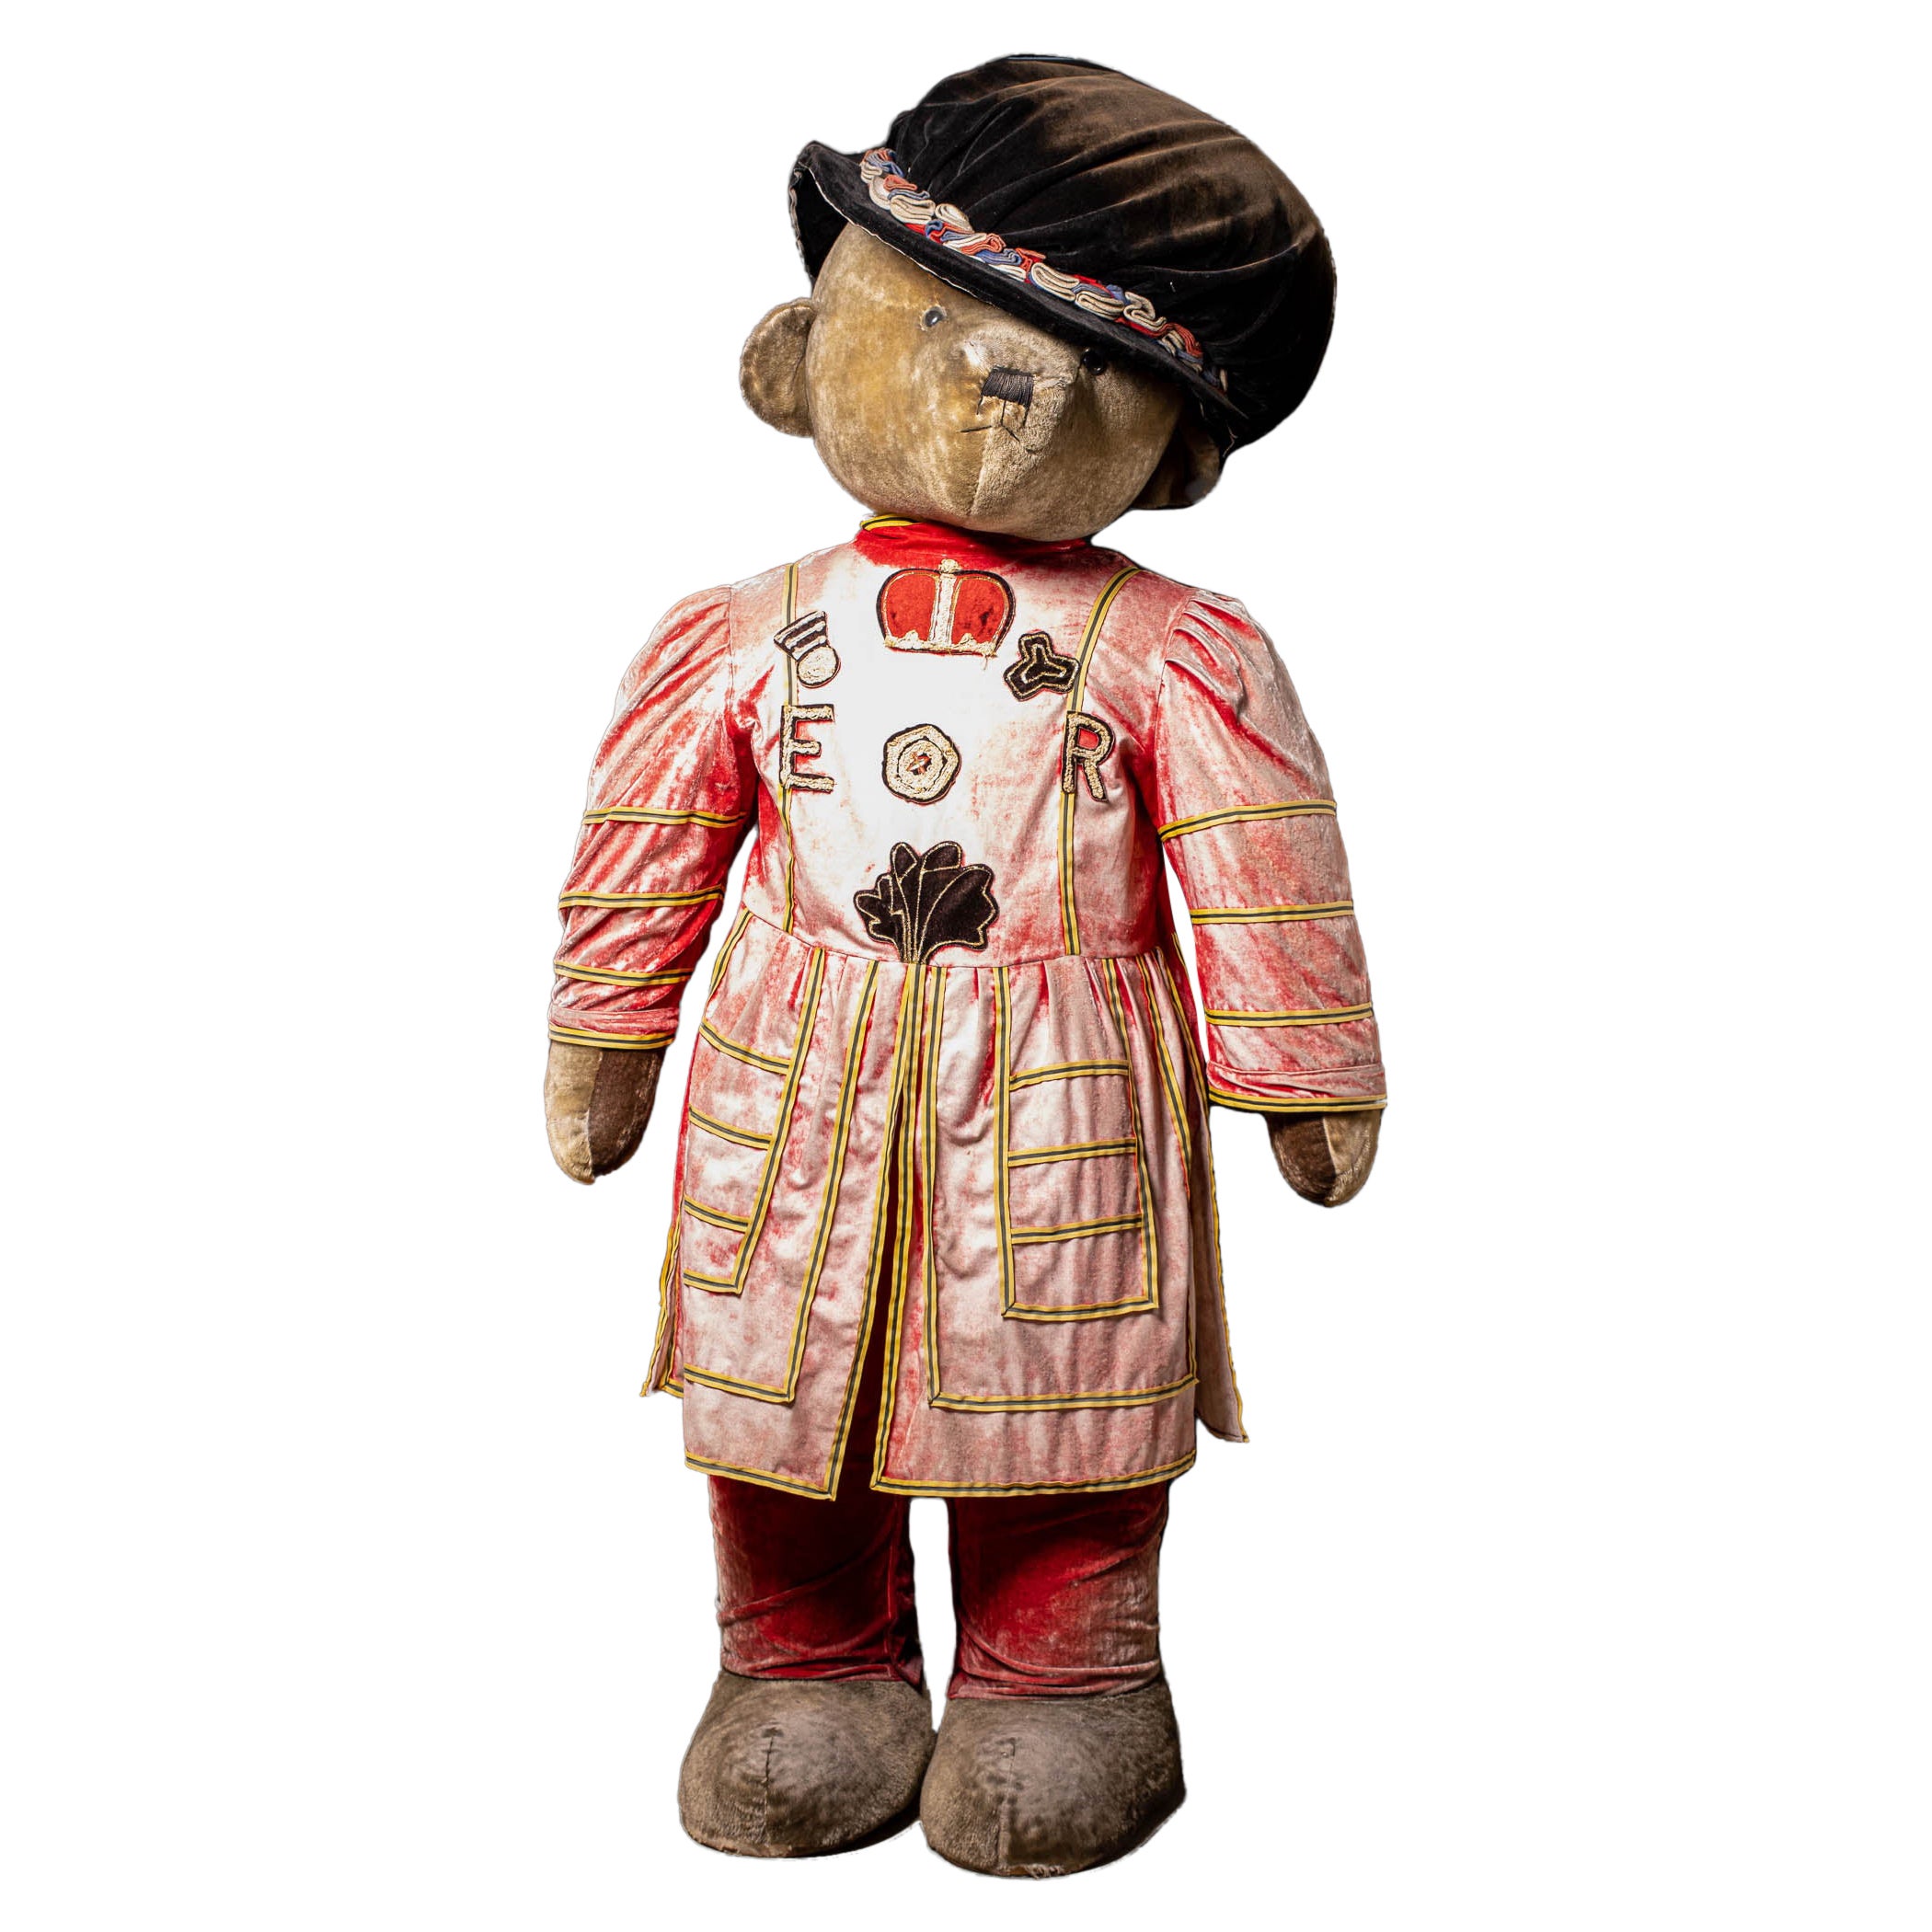 Riesiger lebensgroßer Teddybär in der berühmten Uniform der Wächter des Tower of London